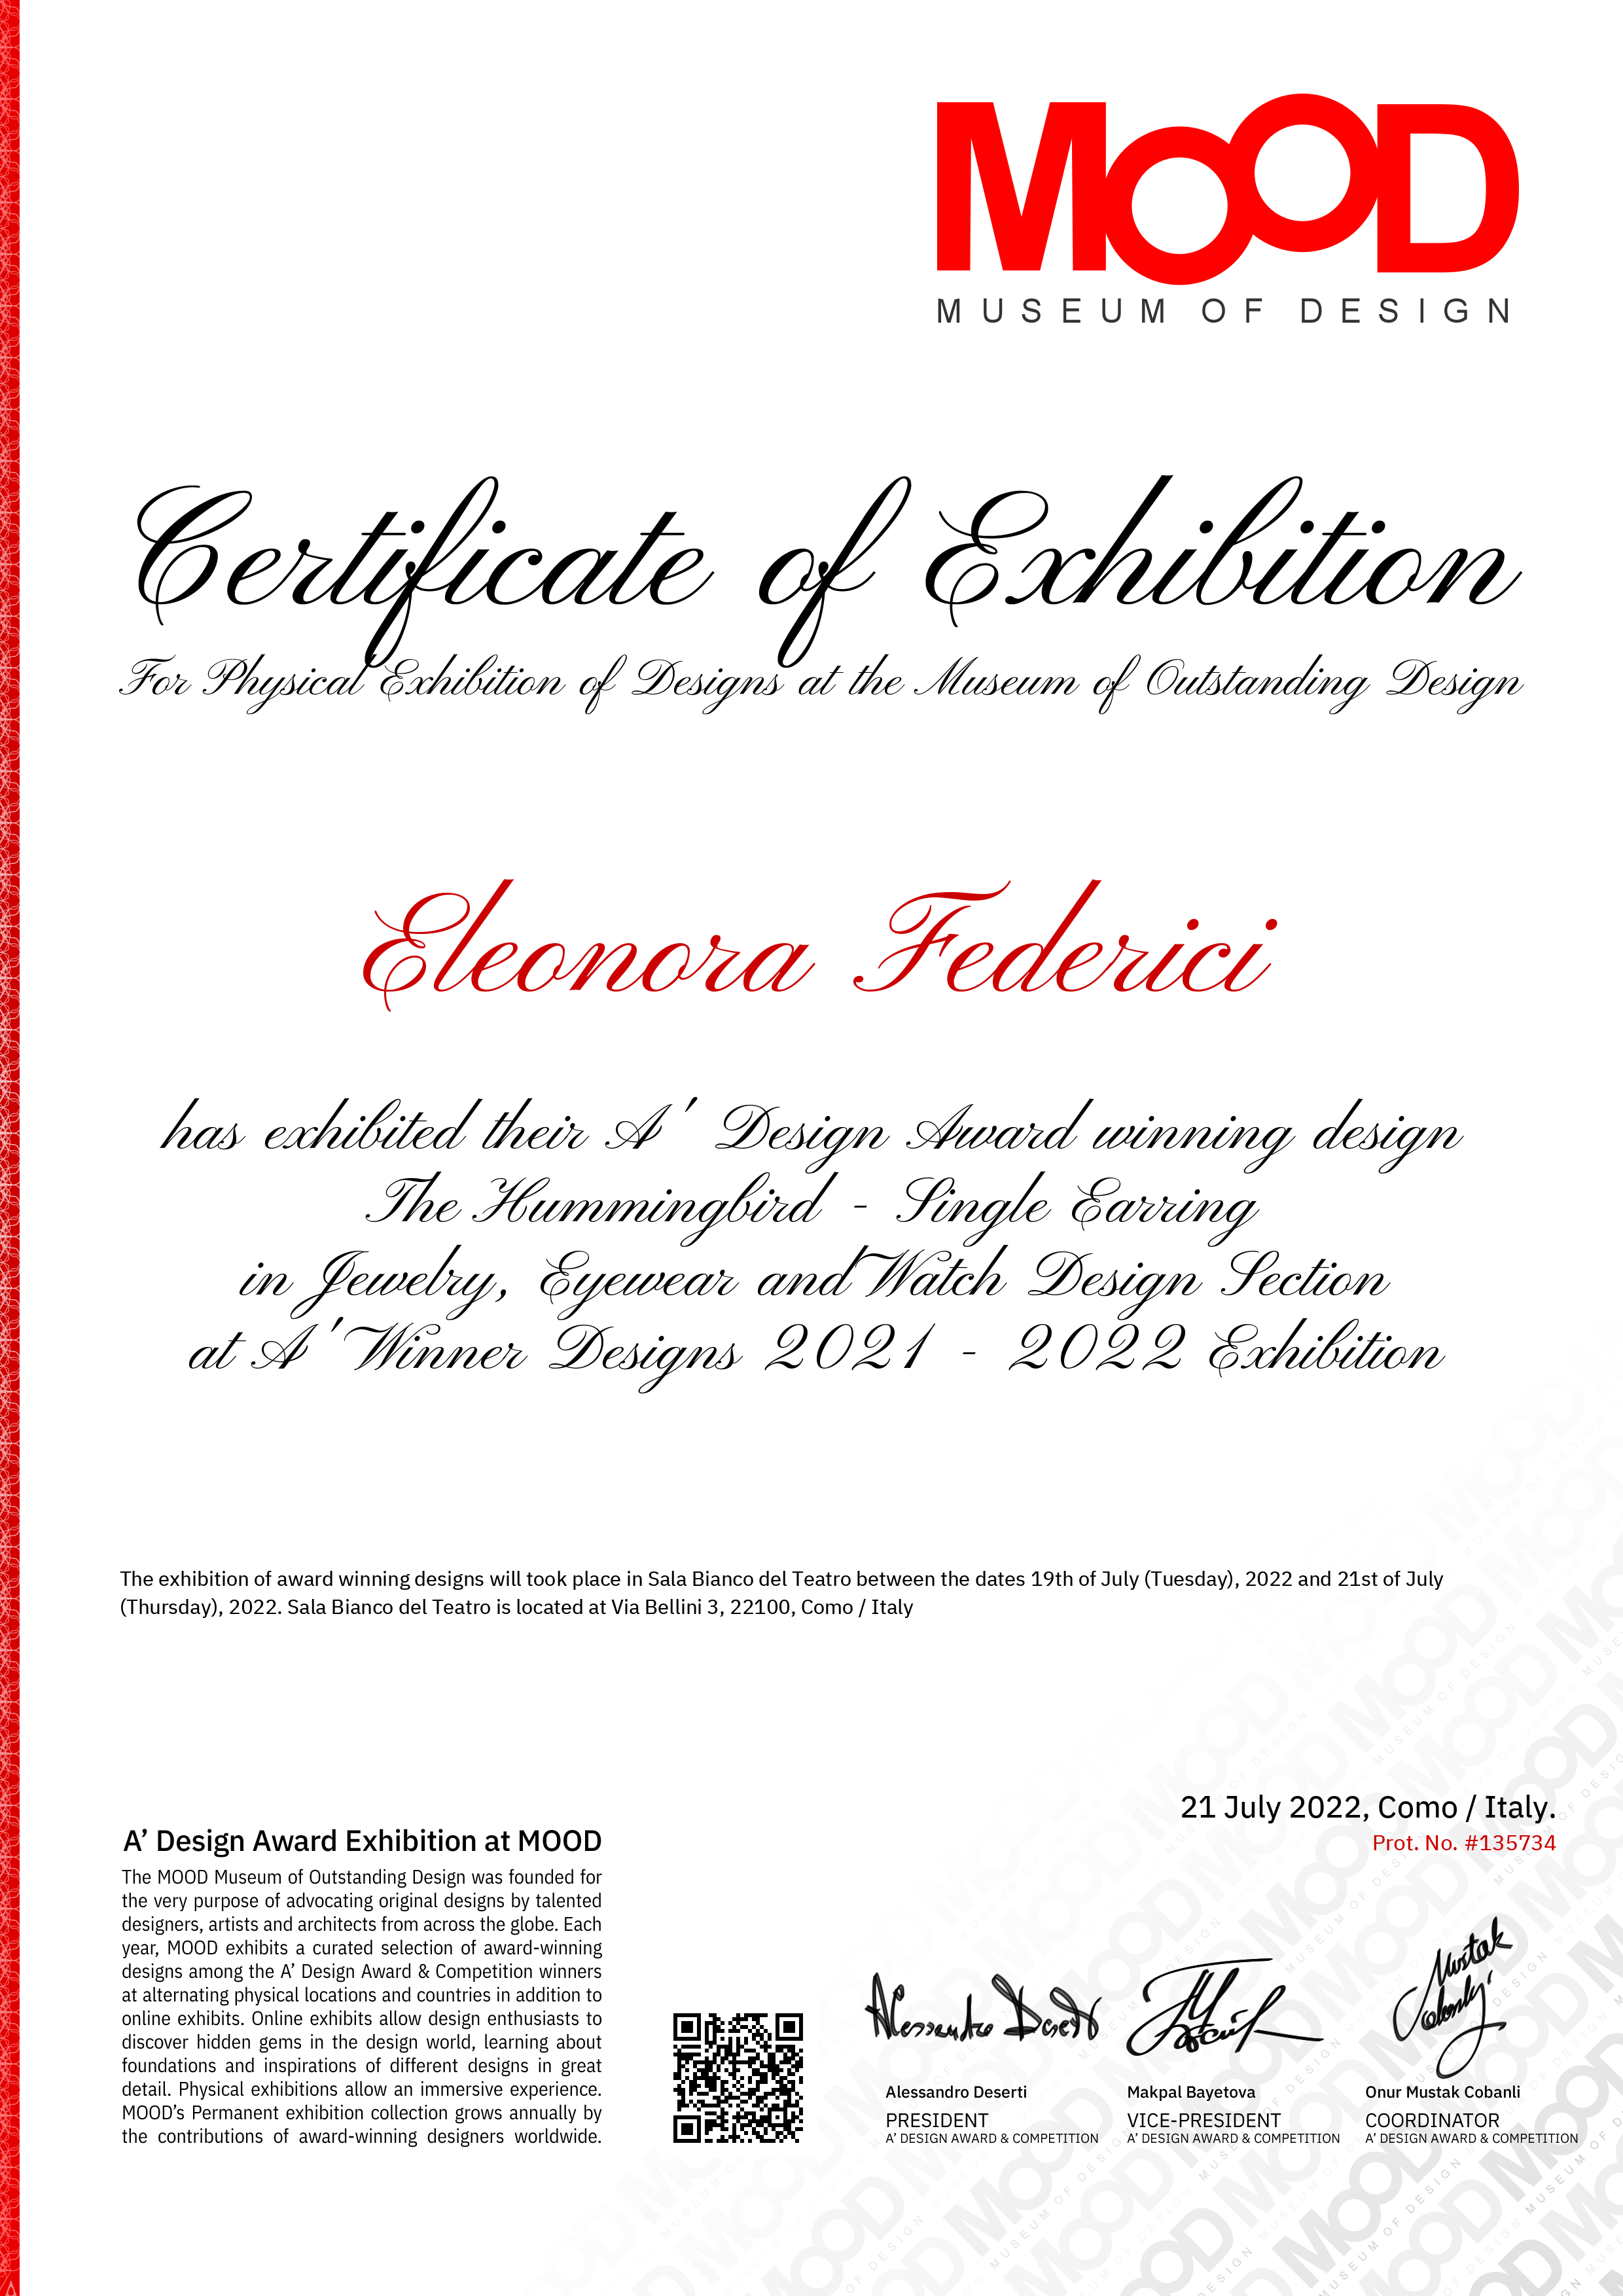 Museum of Design - Certificate of Exhibition